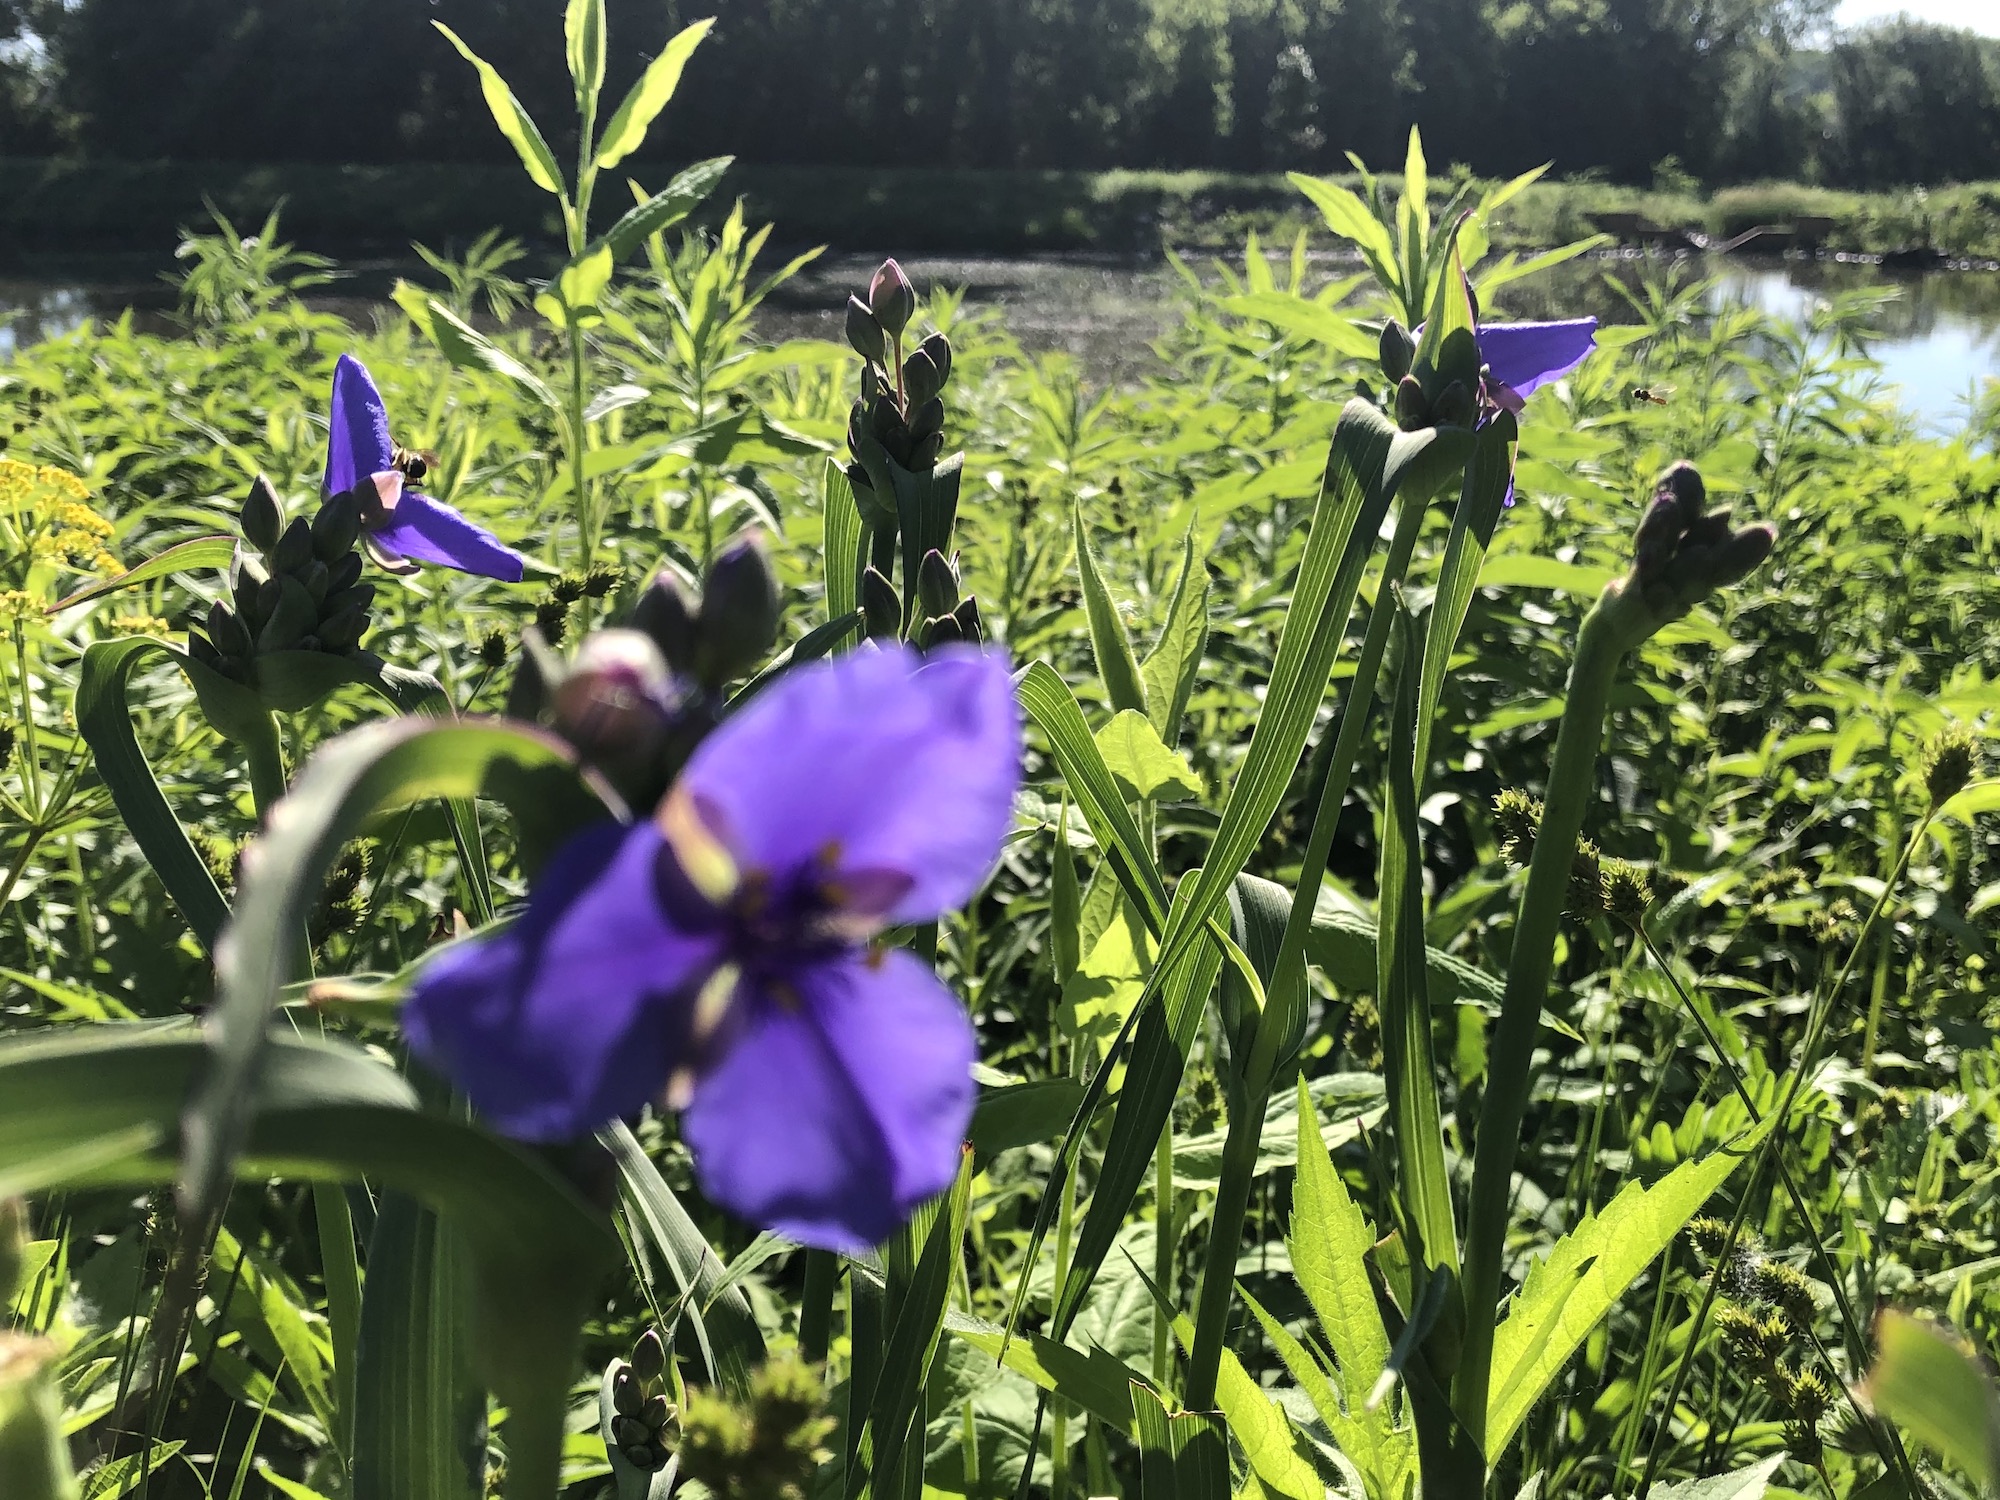 Spiderwort on bank of retaining pond in Madison, Wisconsin on June 8, 2019.